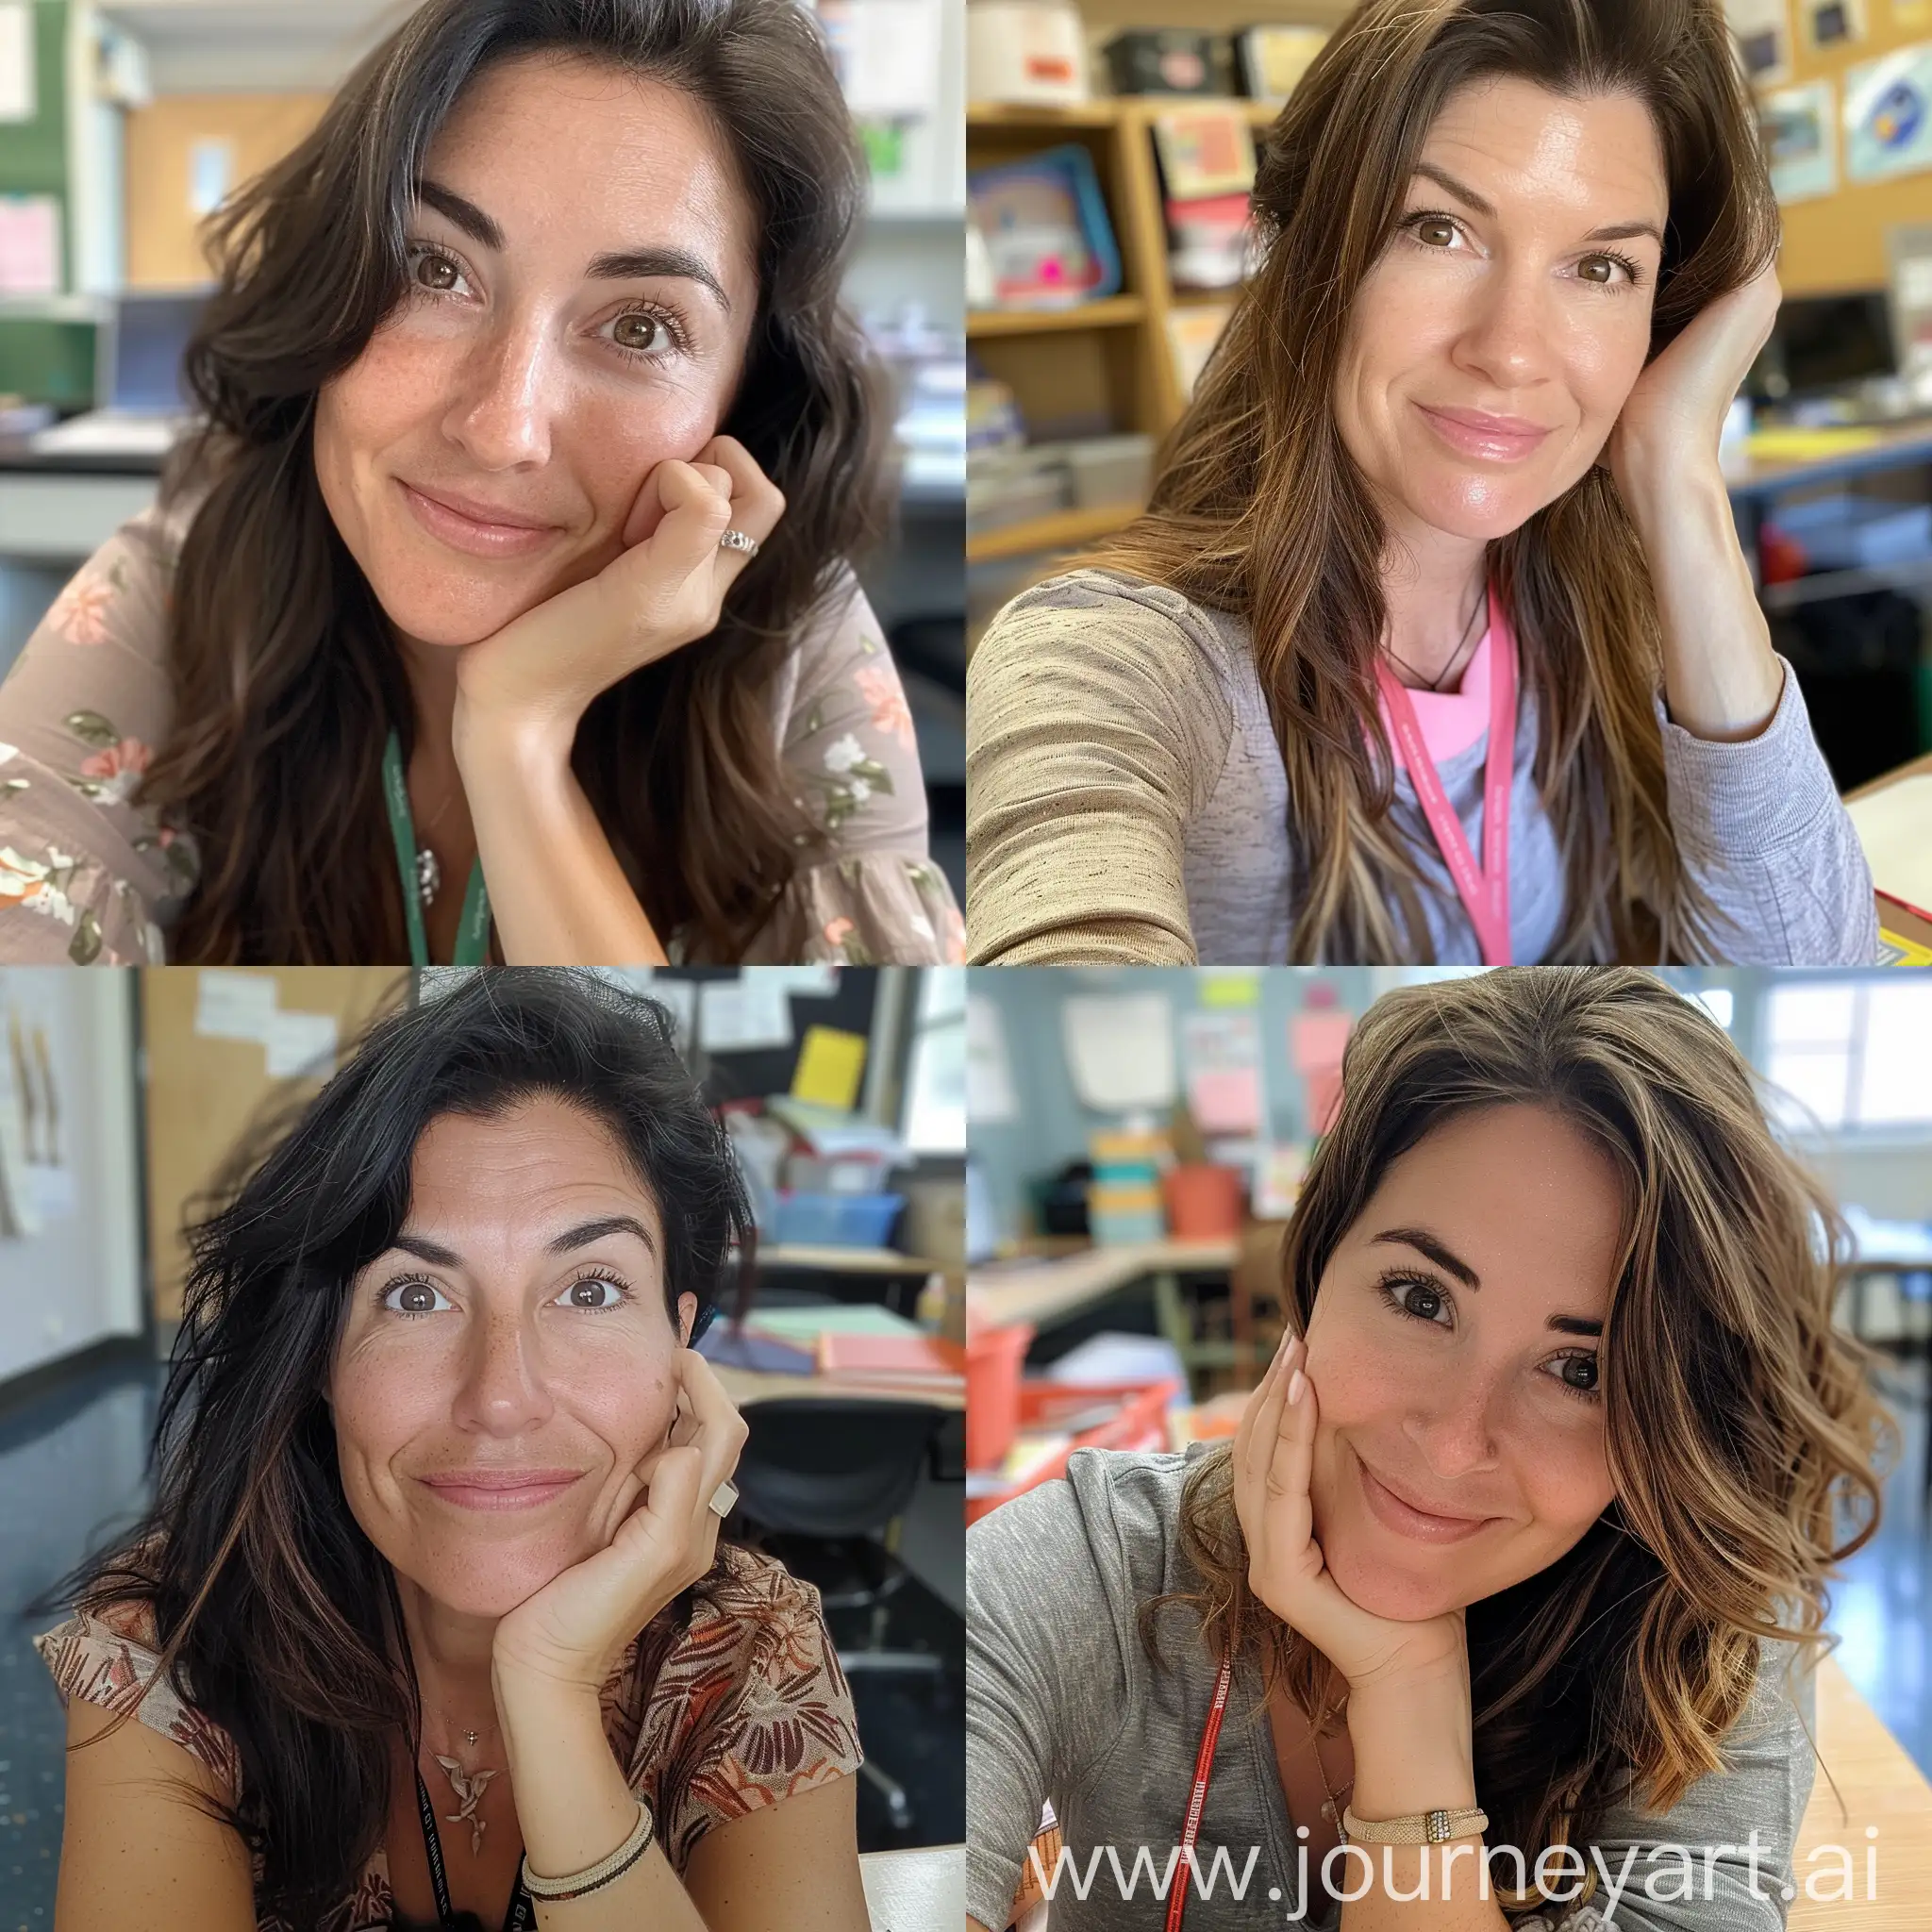 Elementary-School-Teacher-Taking-a-Selfie-at-Desk